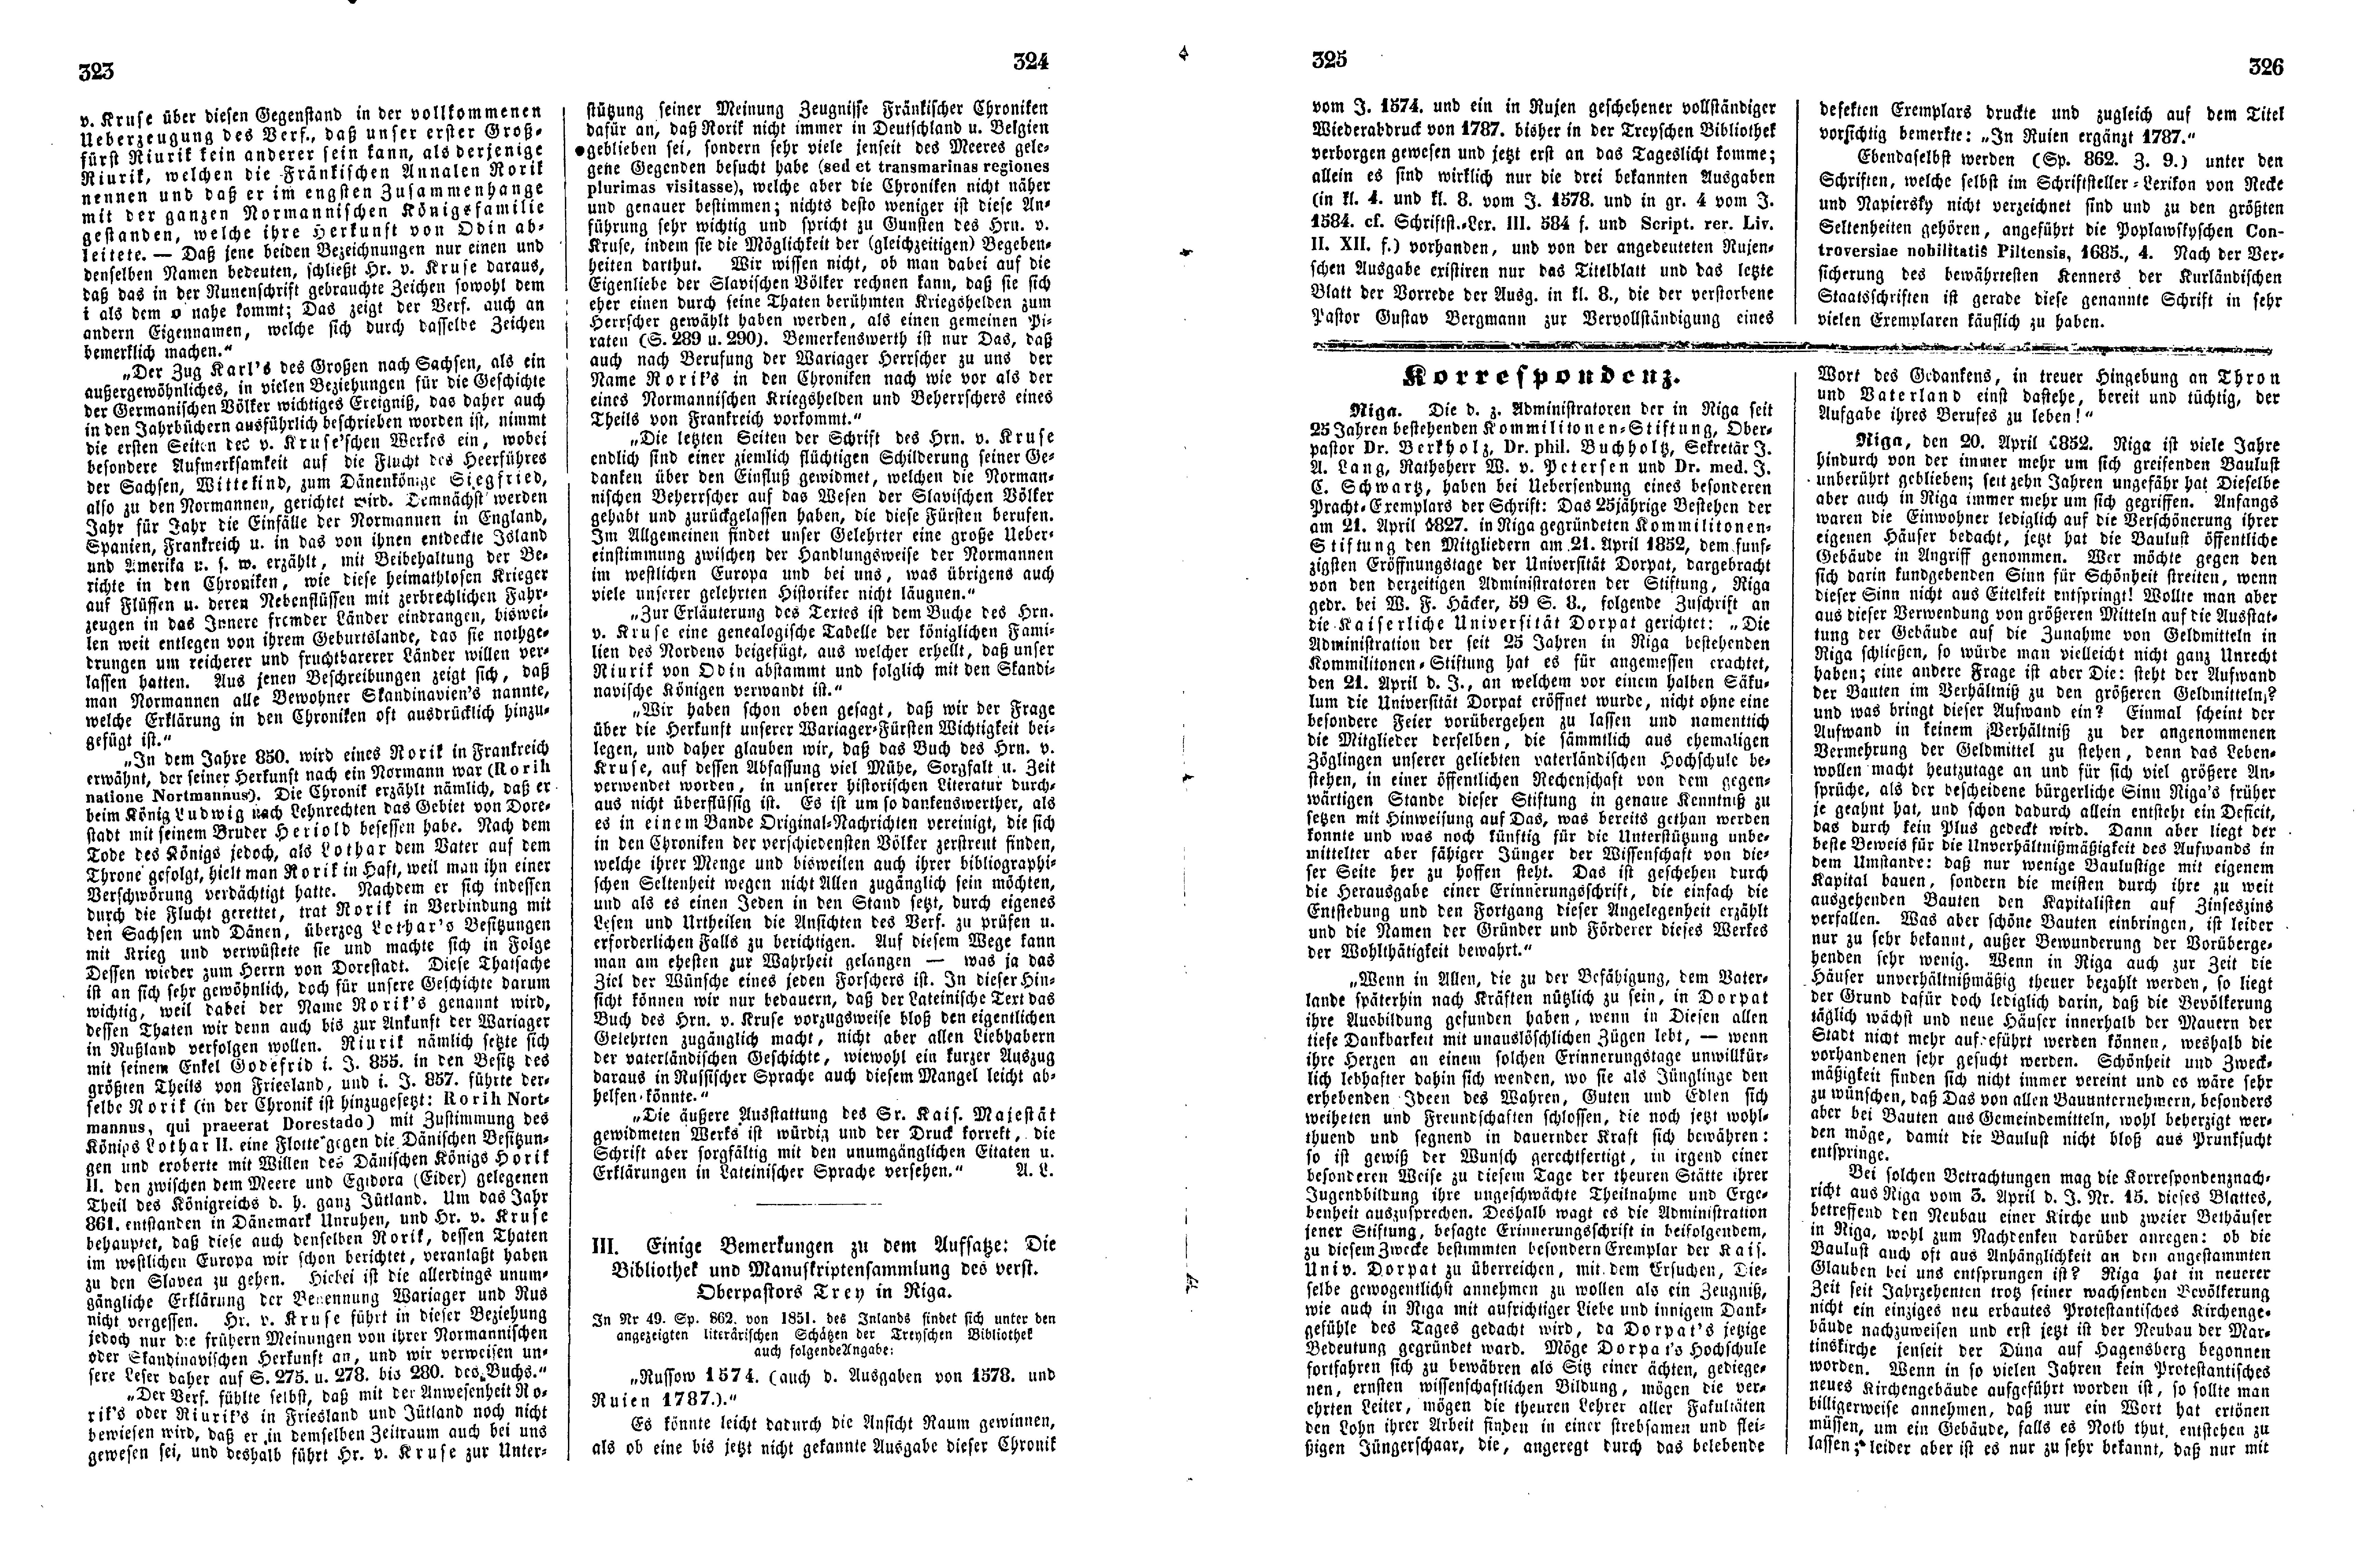 Das Inland [17] (1852) | 85. (323-326) Main body of text